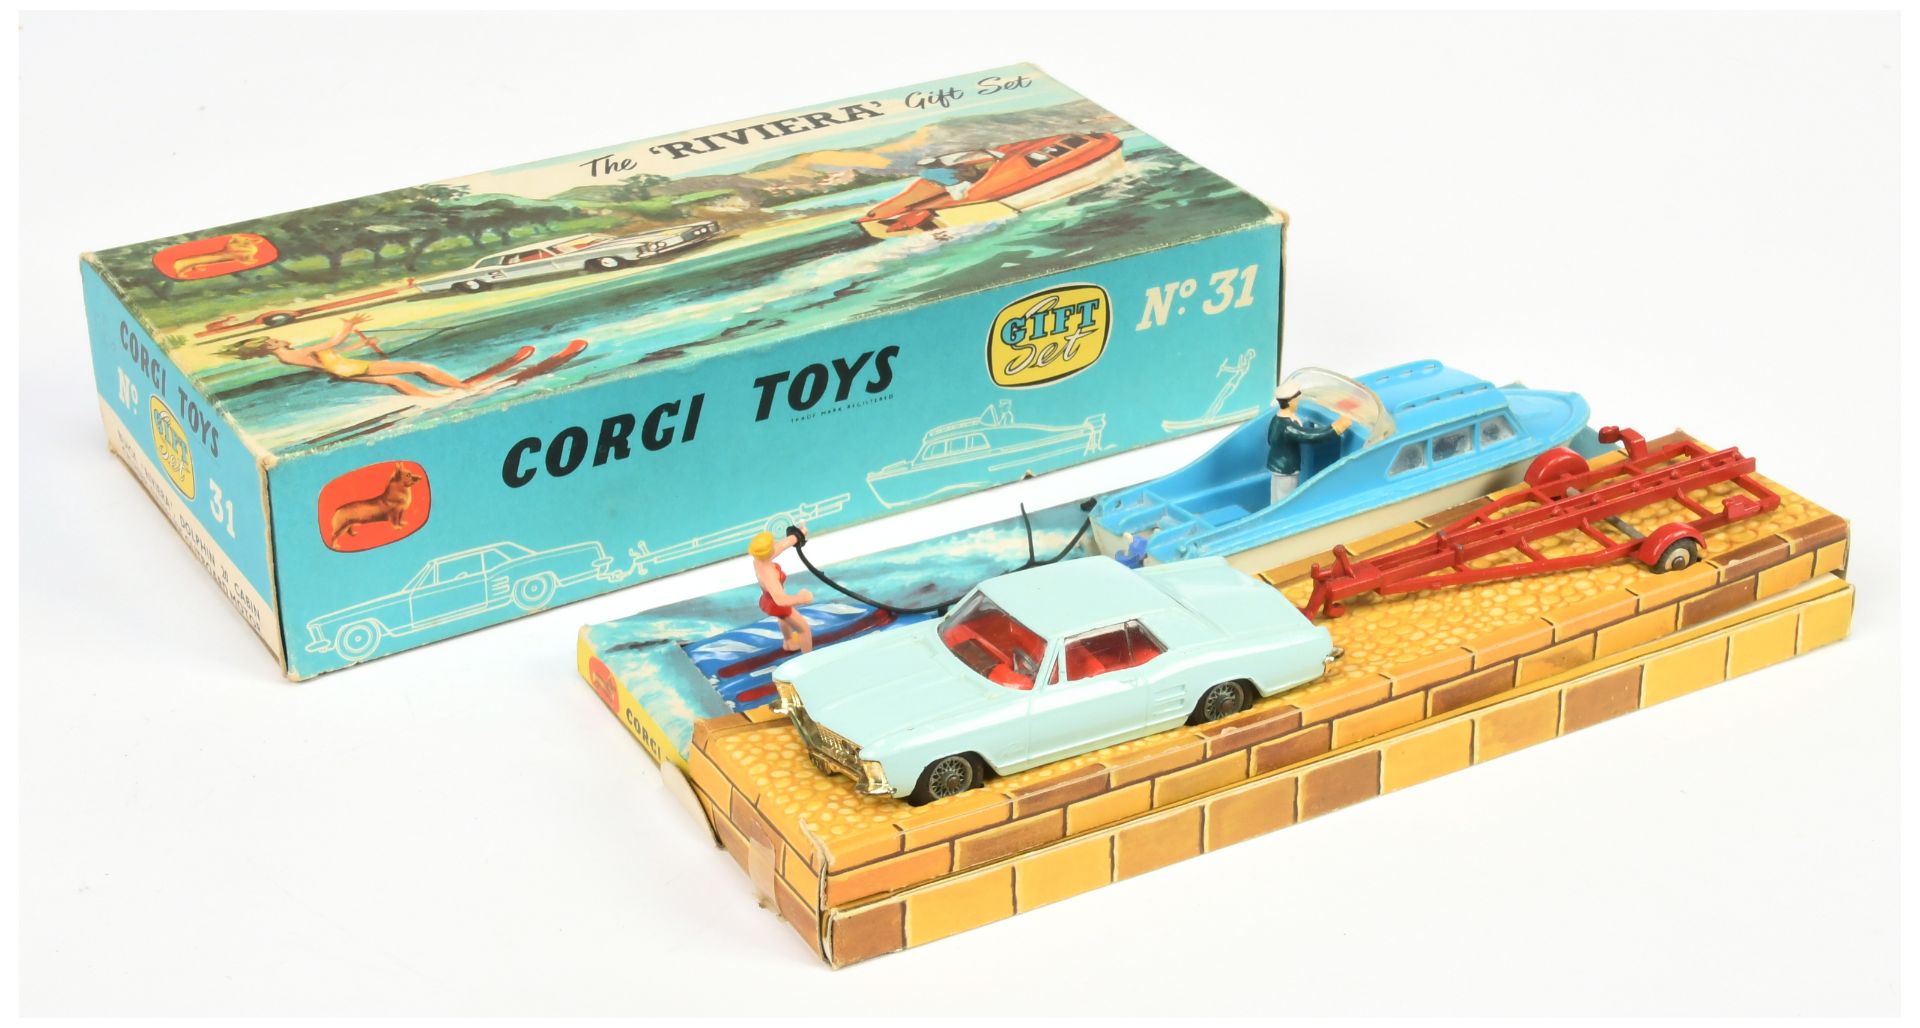 Corgi Toys GS31 "Riviera" Gift Set to include Buick Rivera - Light Blue, red interior, chrome tri... - Image 2 of 2